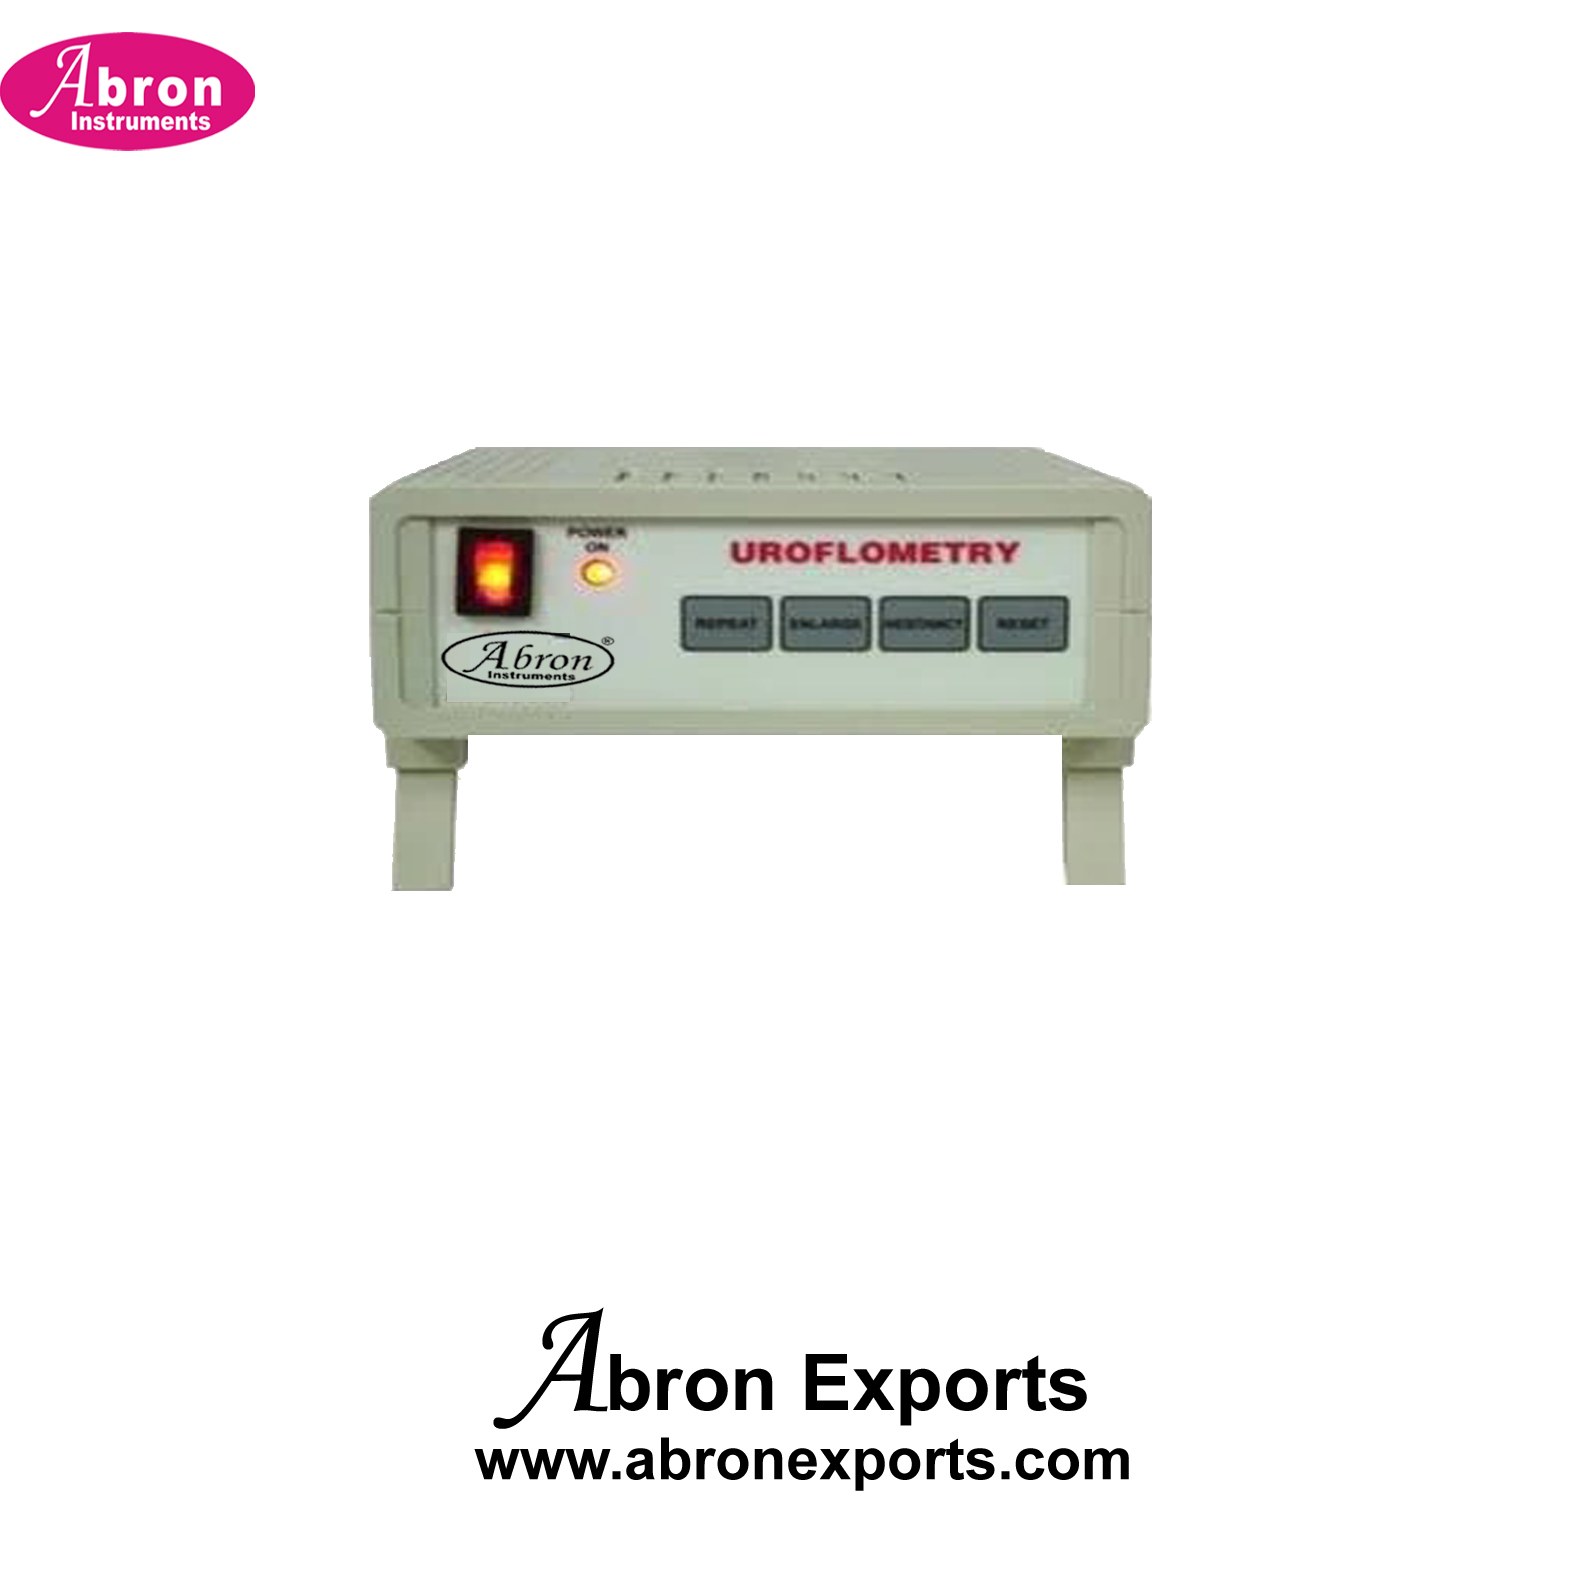 Uroflowmeter Urine Flow Meter for Hospital Medical Abron ABM-2340A 